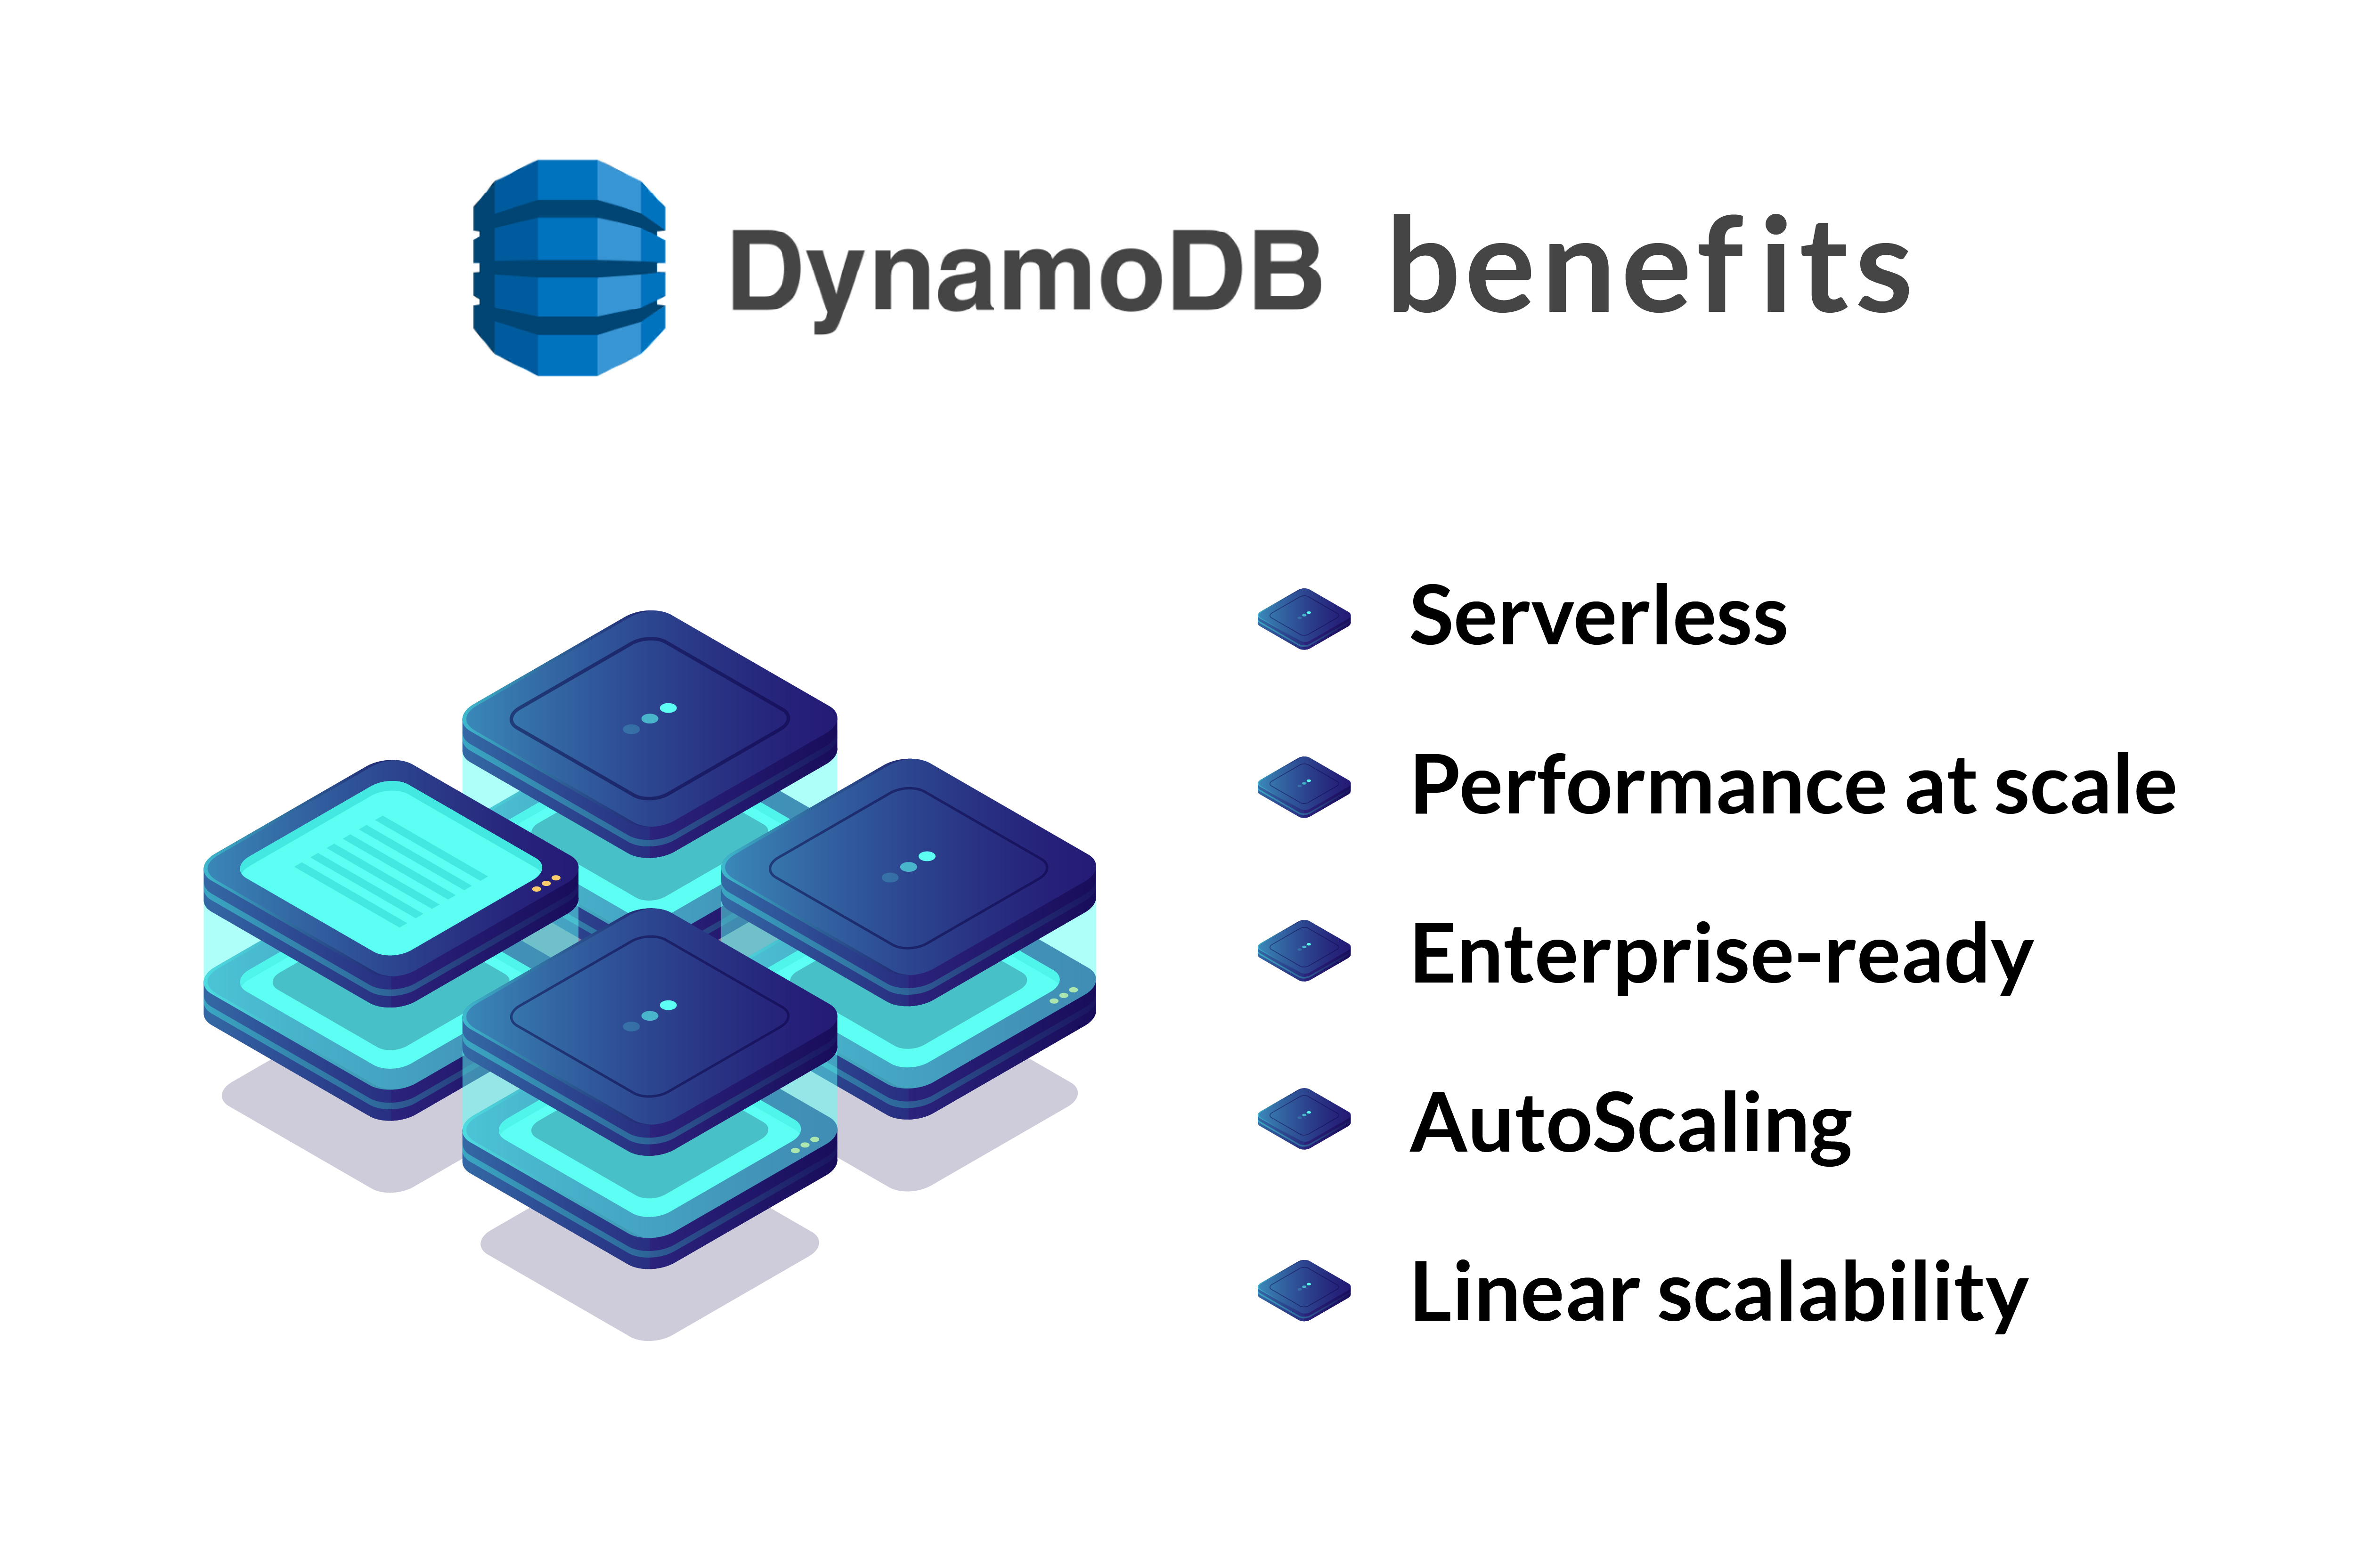 DynamoDB benefits